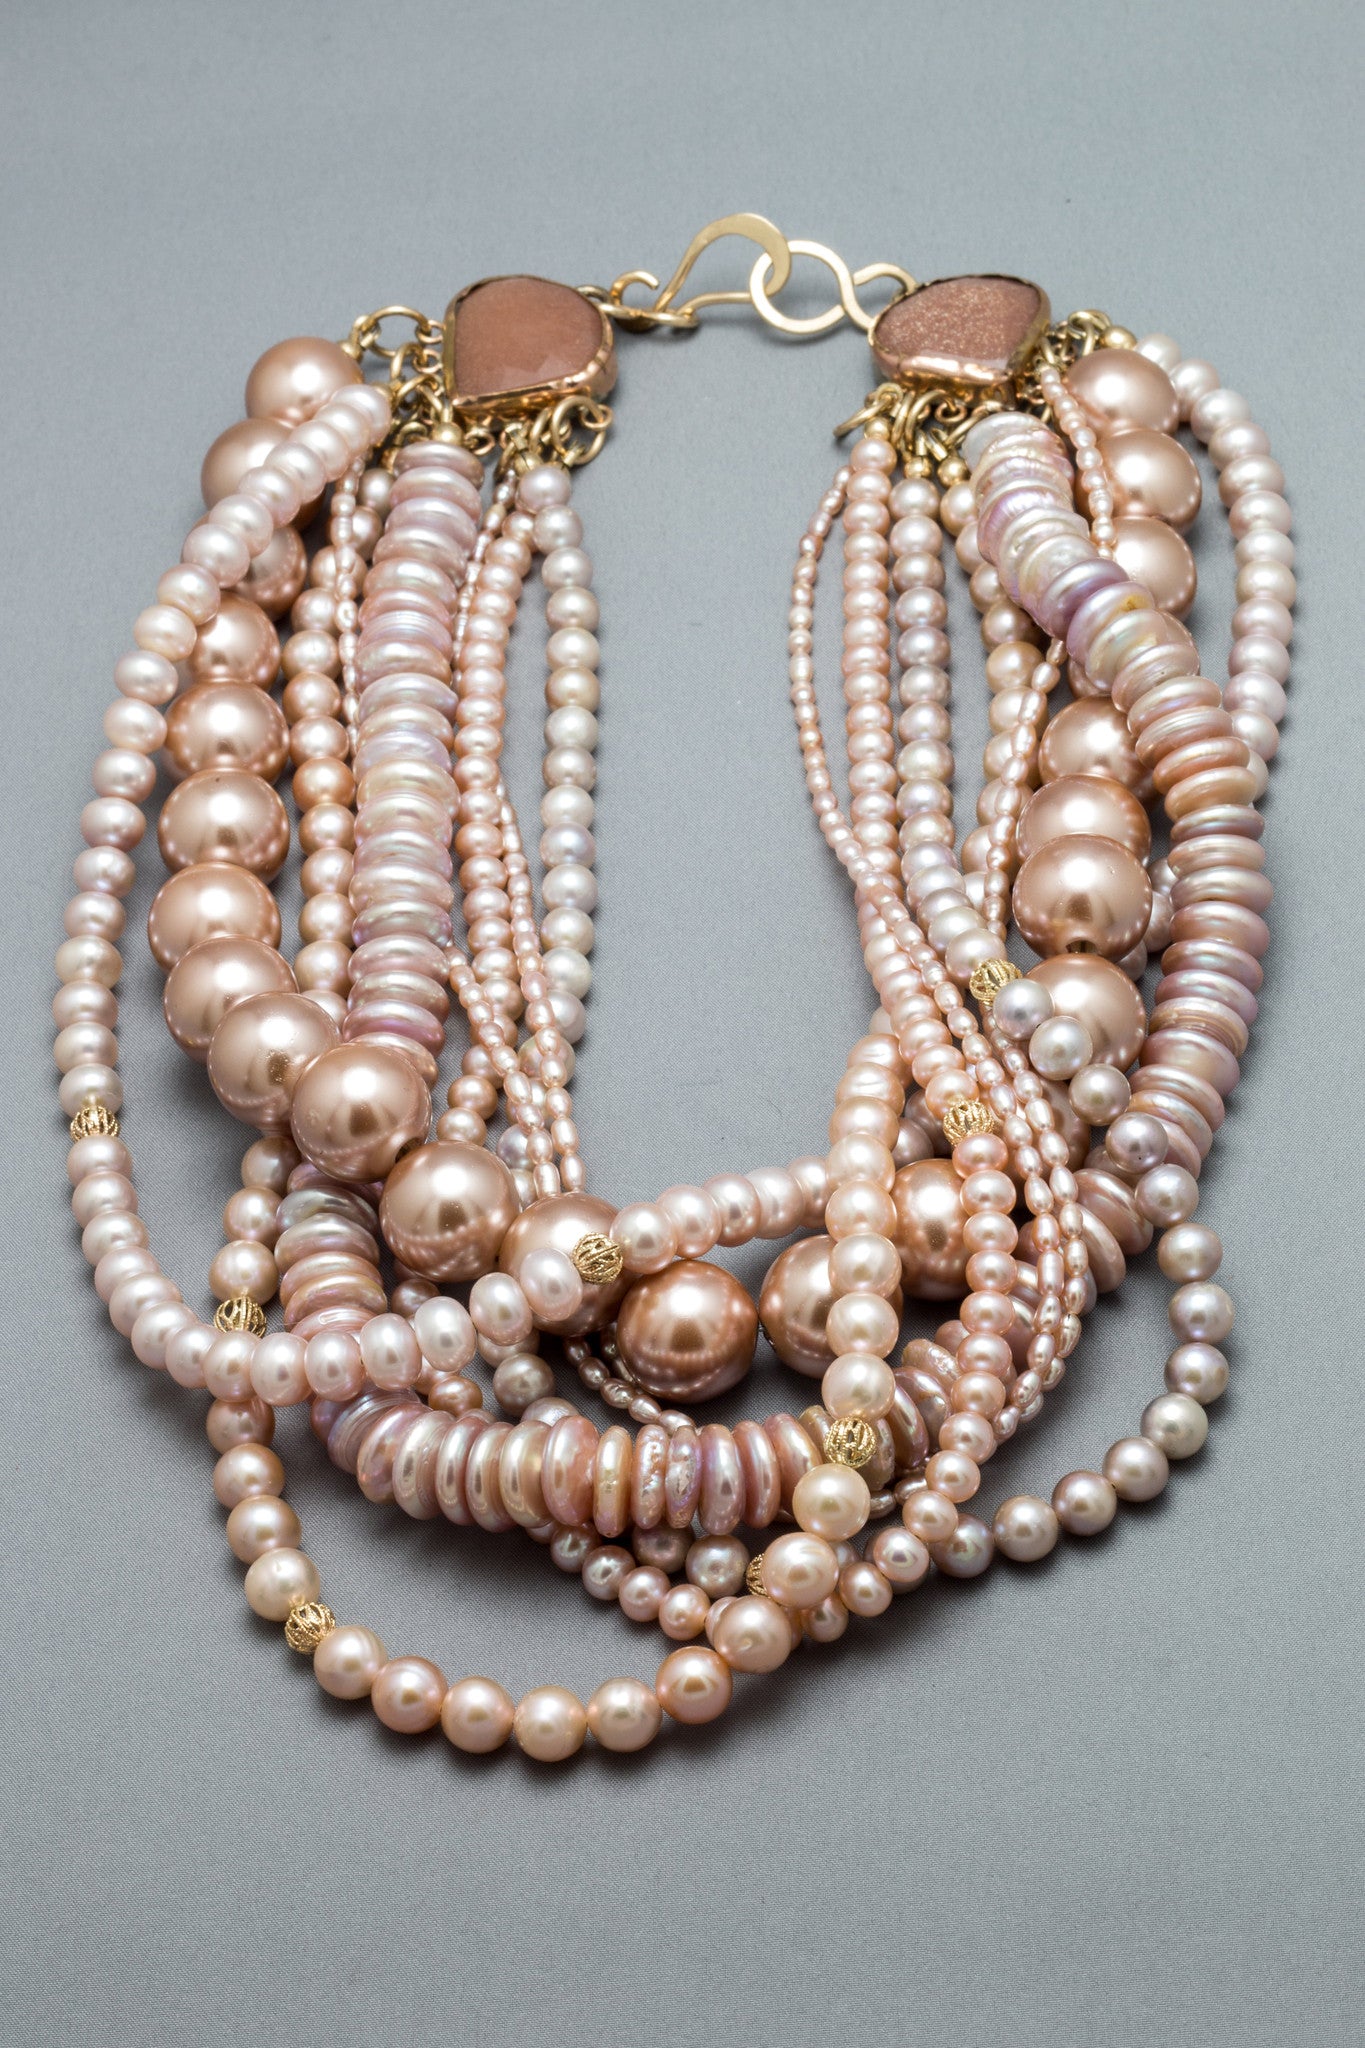 A Plethora of Blush Pearls